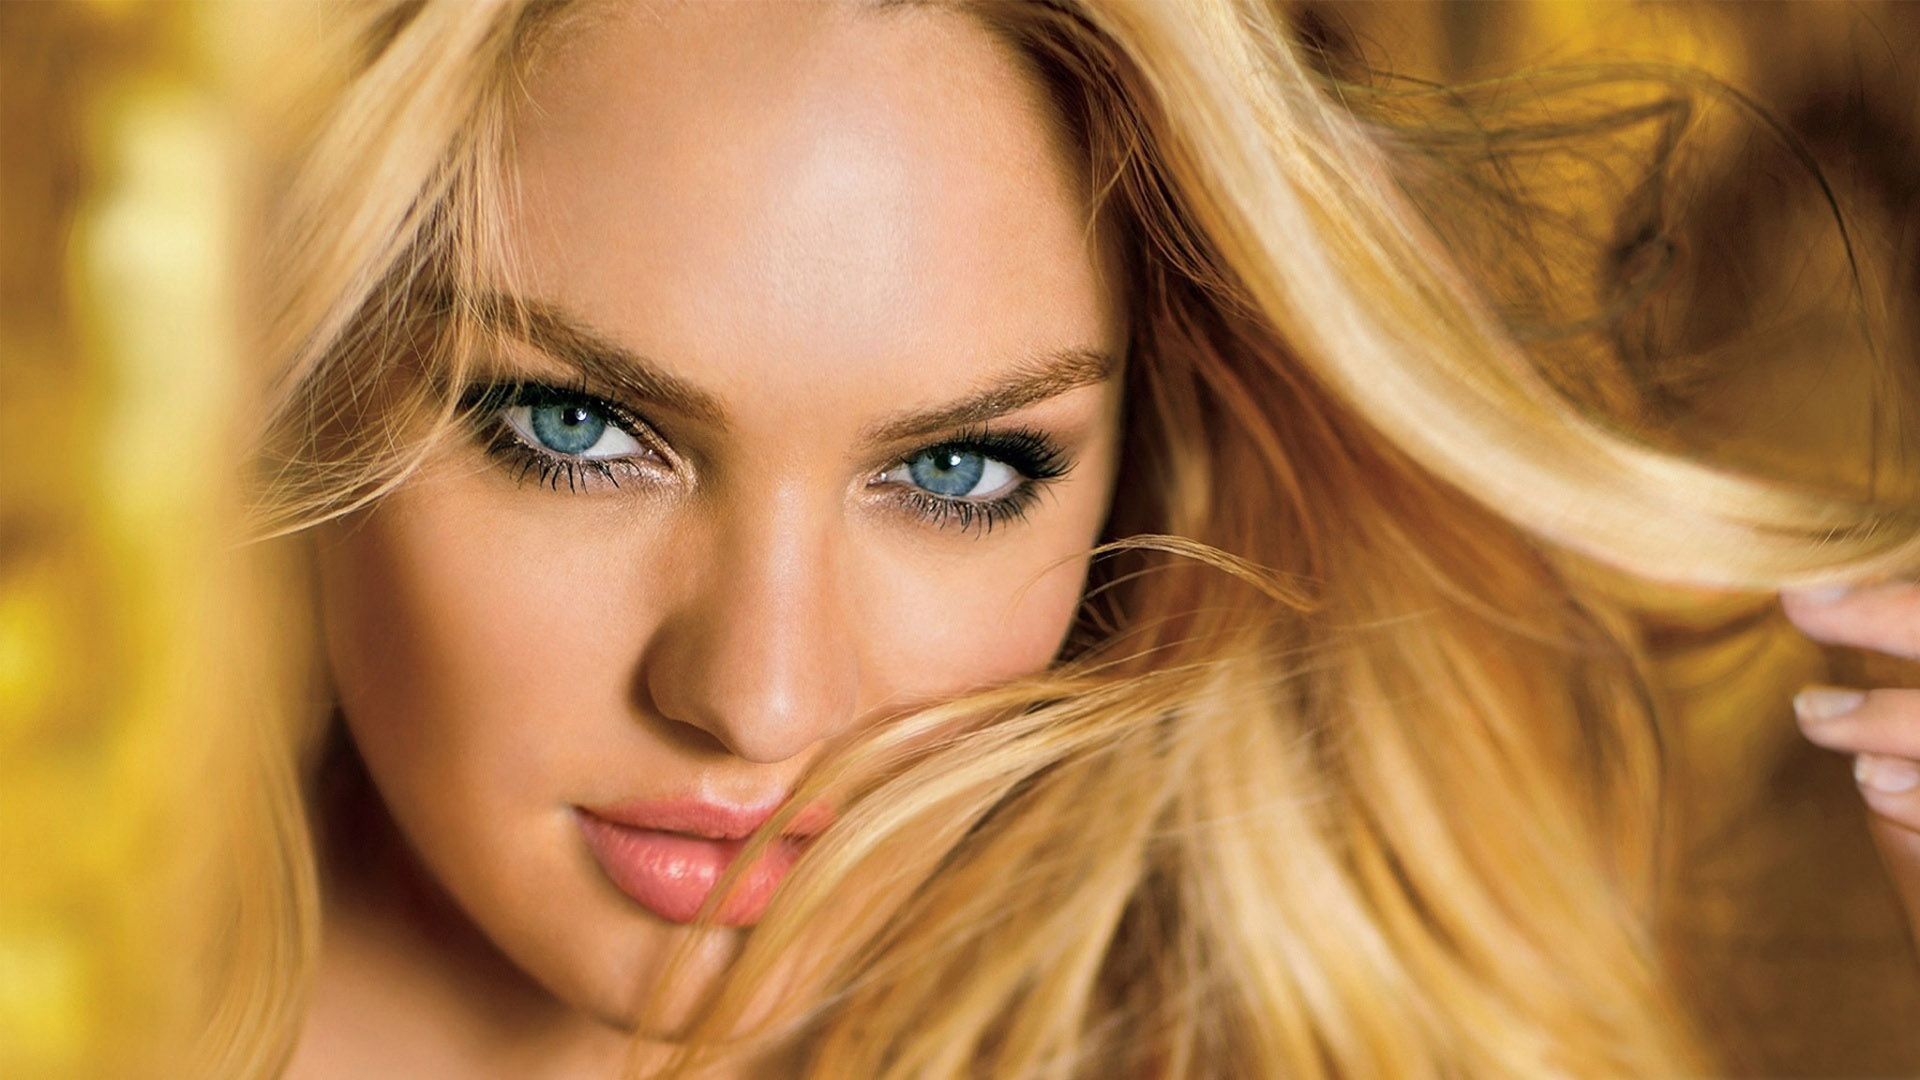 Women Candice Swanepoel Models South Africa Blue Eyes Girl Model